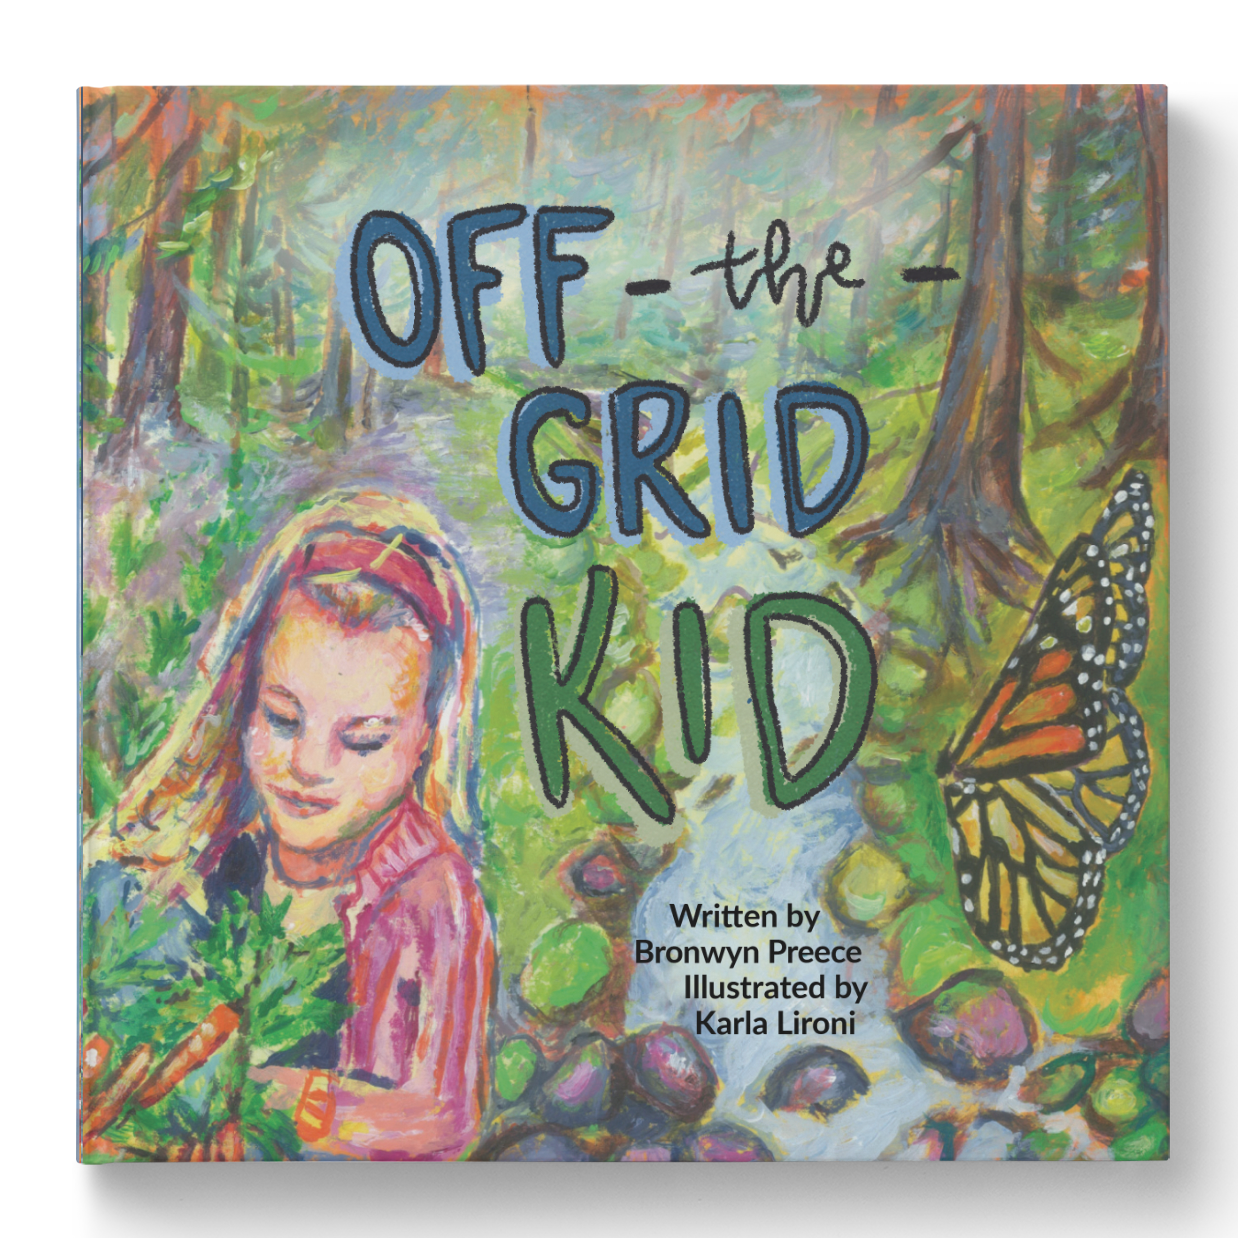 Off-the-Grid Kid